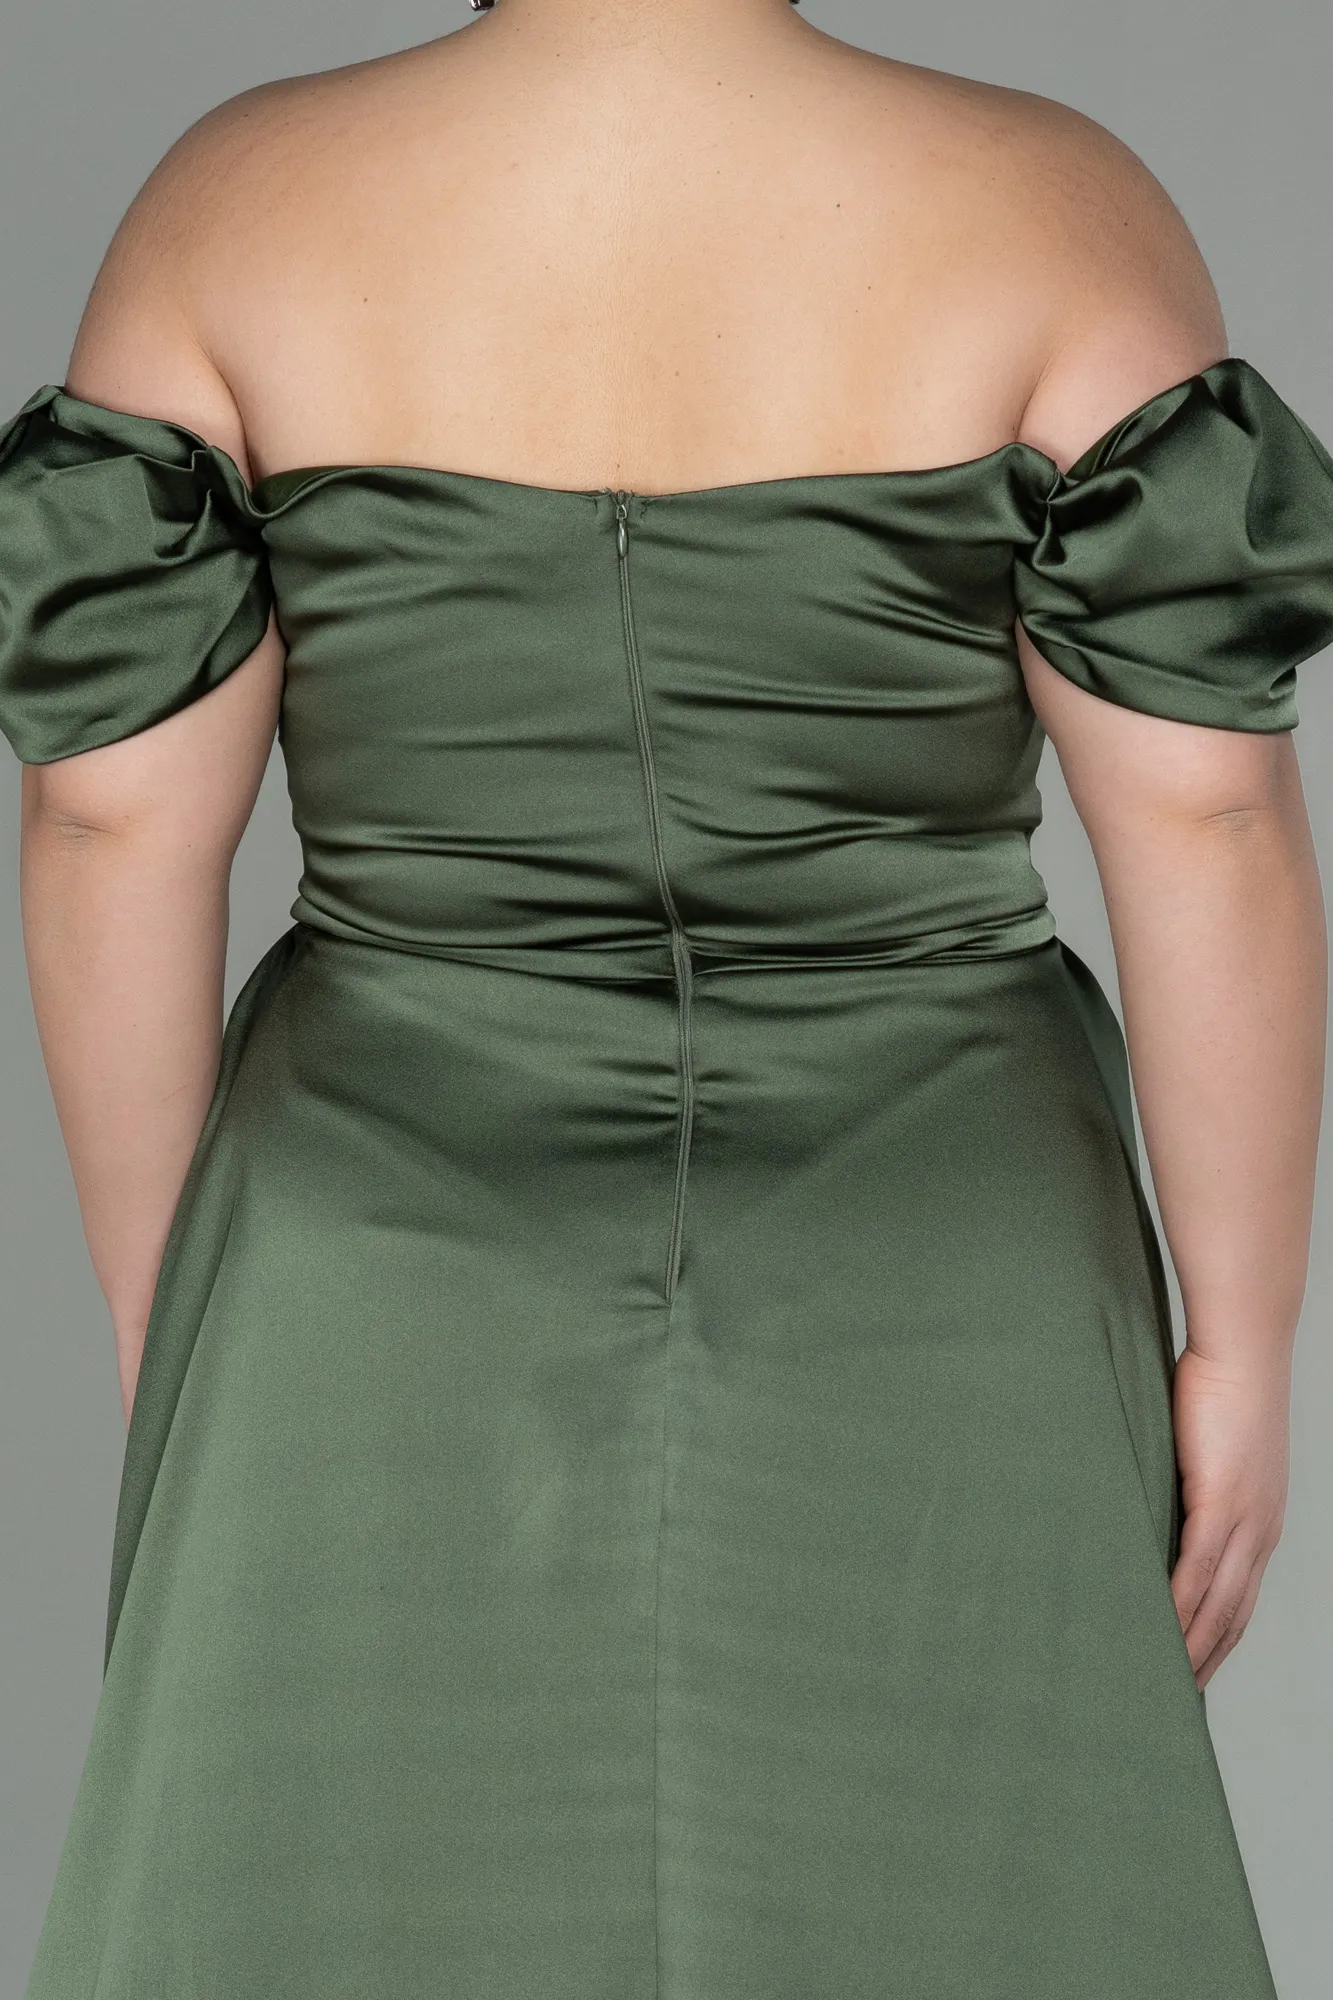 Olive Drab-Long Satin Plus Size Evening Dress ABU2923